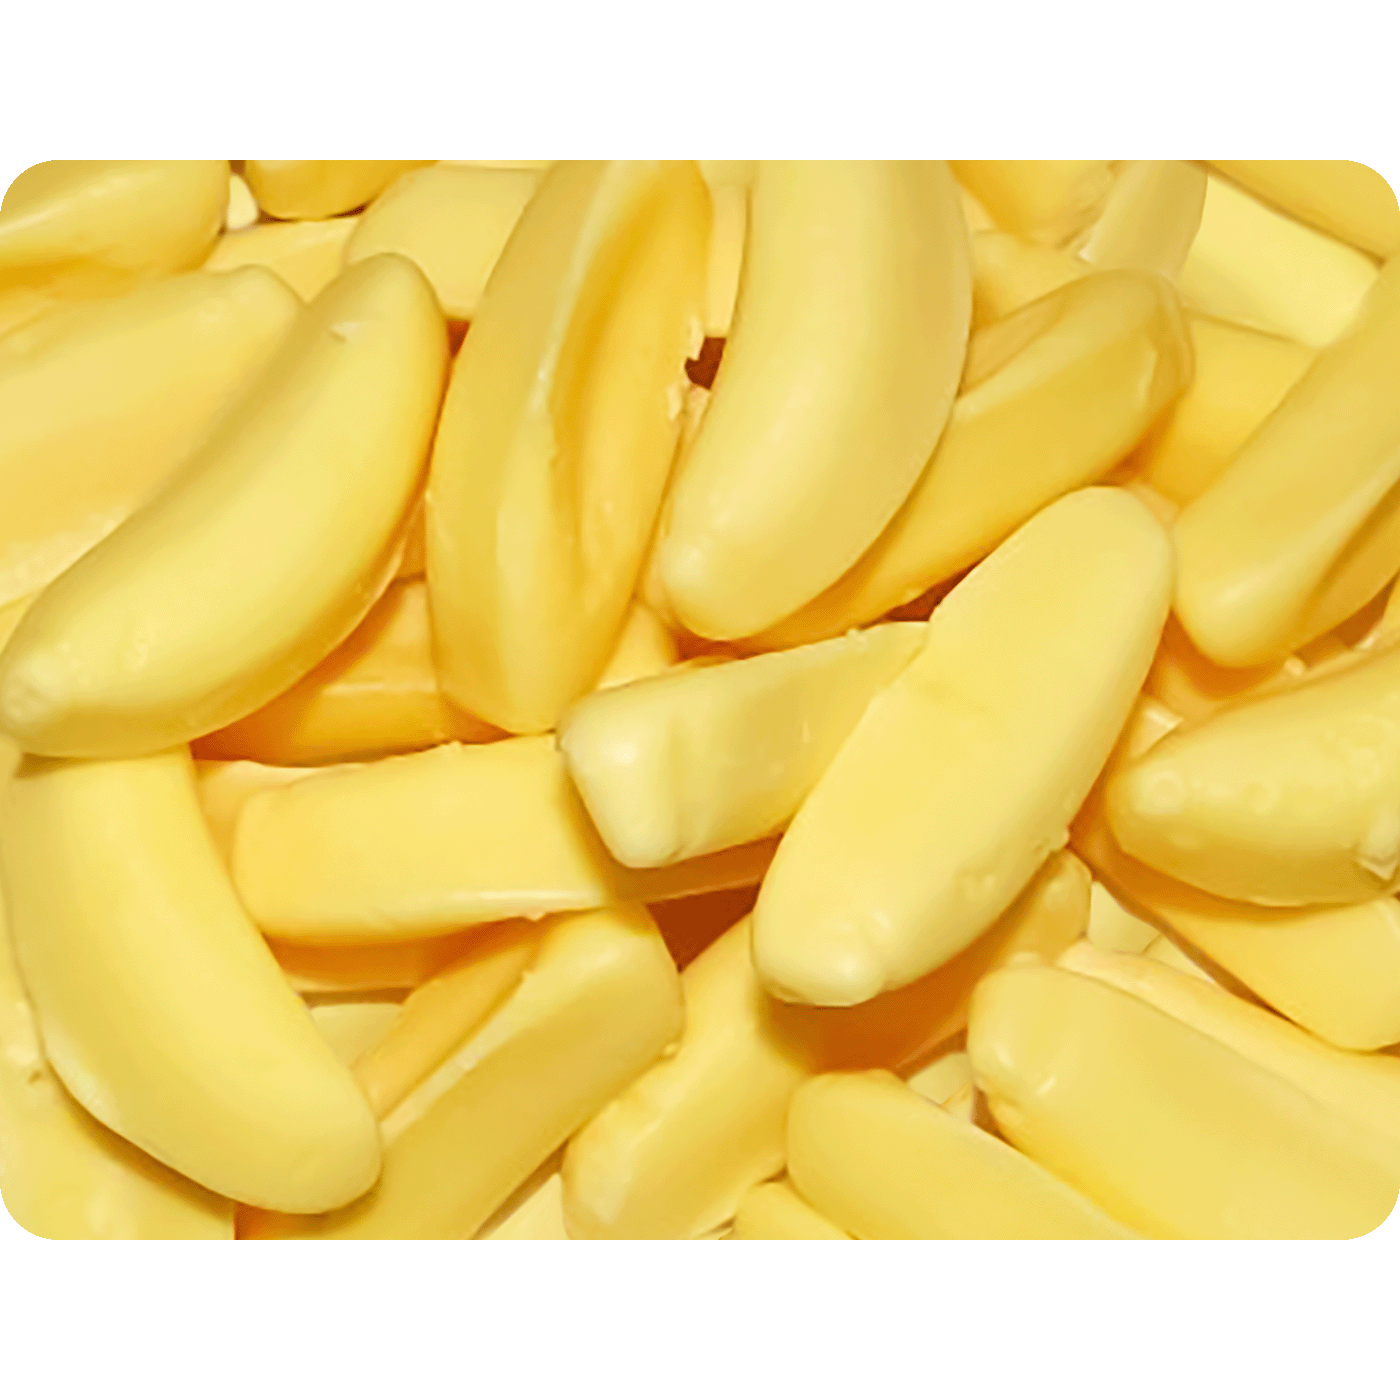 Schuttelaar Bananen (4x1kg) 4kg